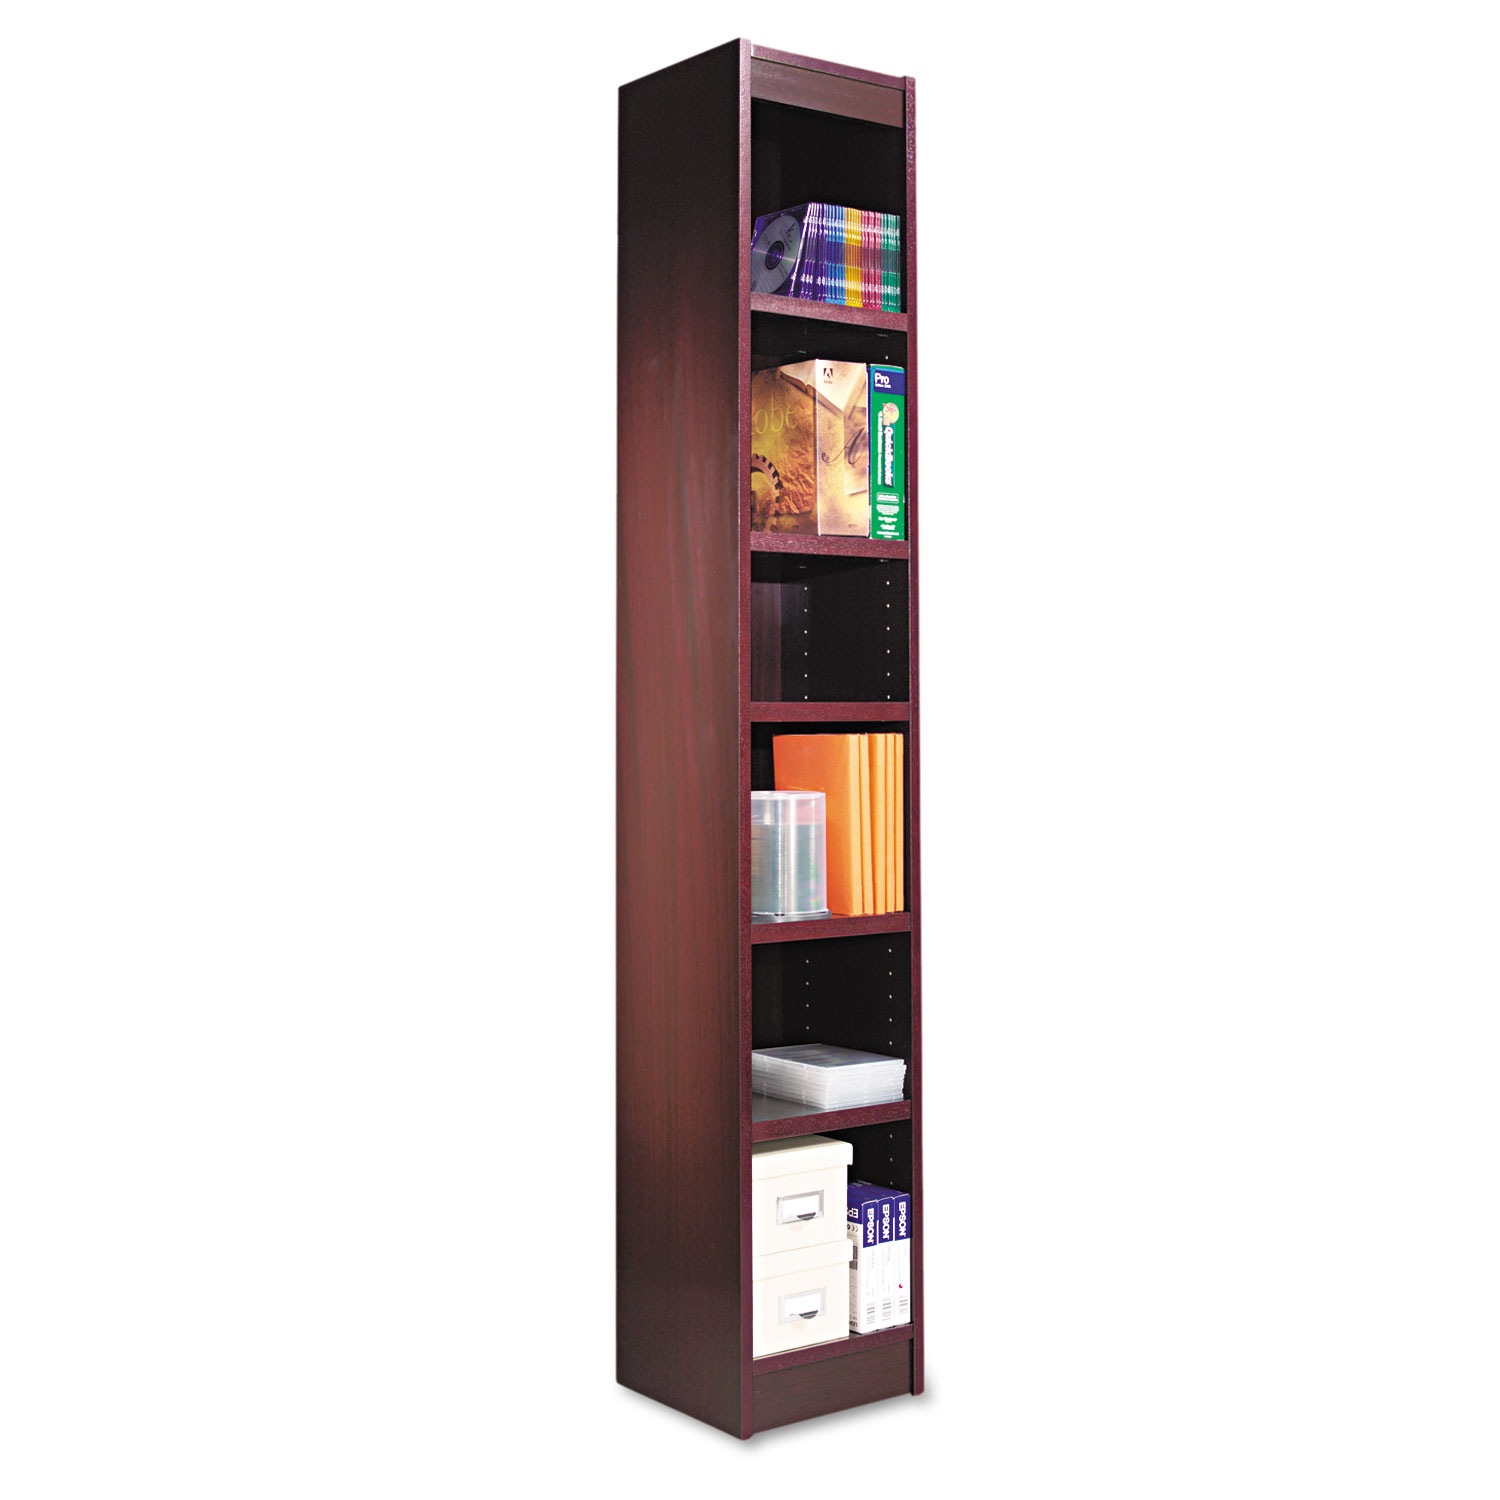 Narrow Profile Bookcase, Wood Veneer, Six-Shelf, 12w x 11-3/4d x 72h, Mahogany